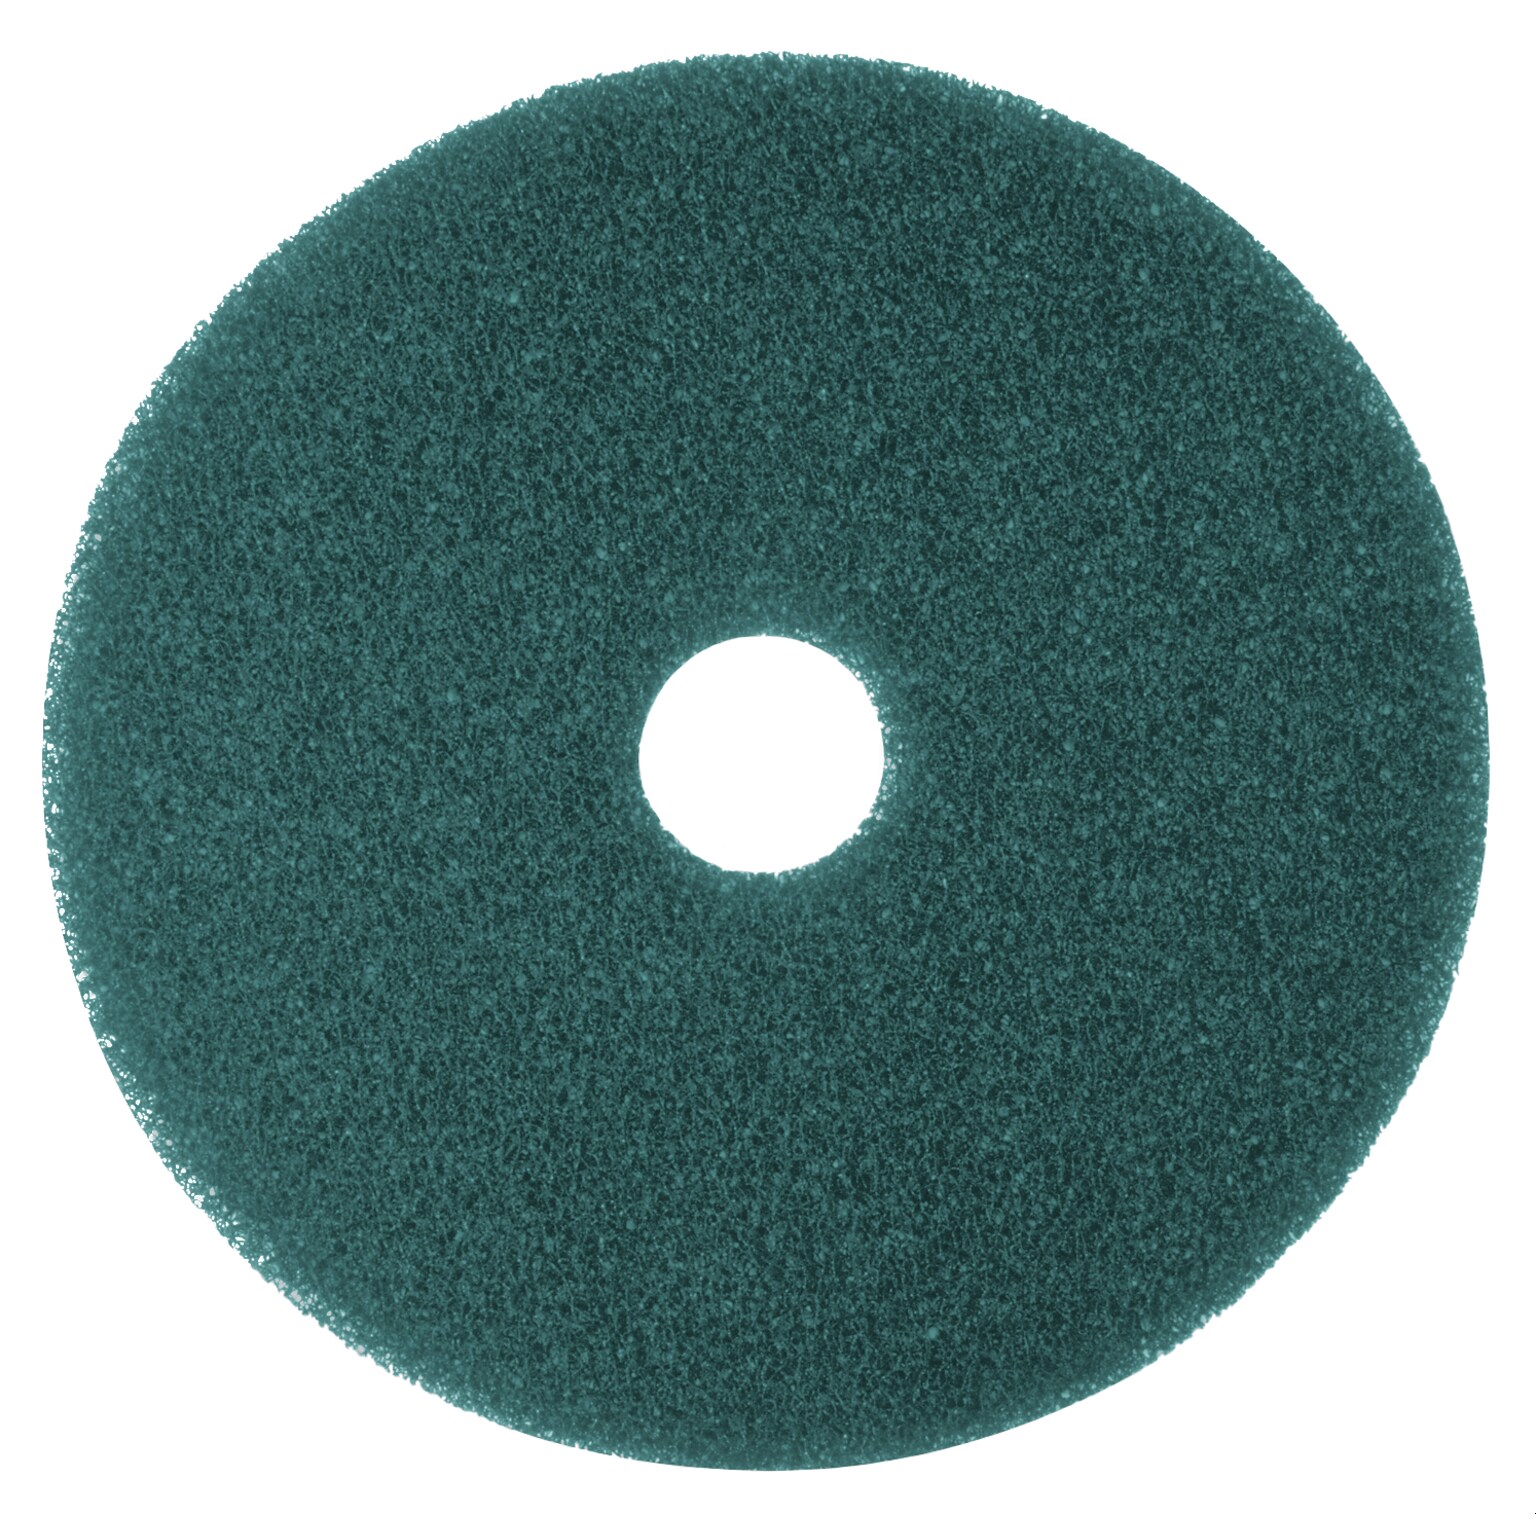 3M 5300 13 Cleaning Floor Pad, Blue, 5/Carton (530013)